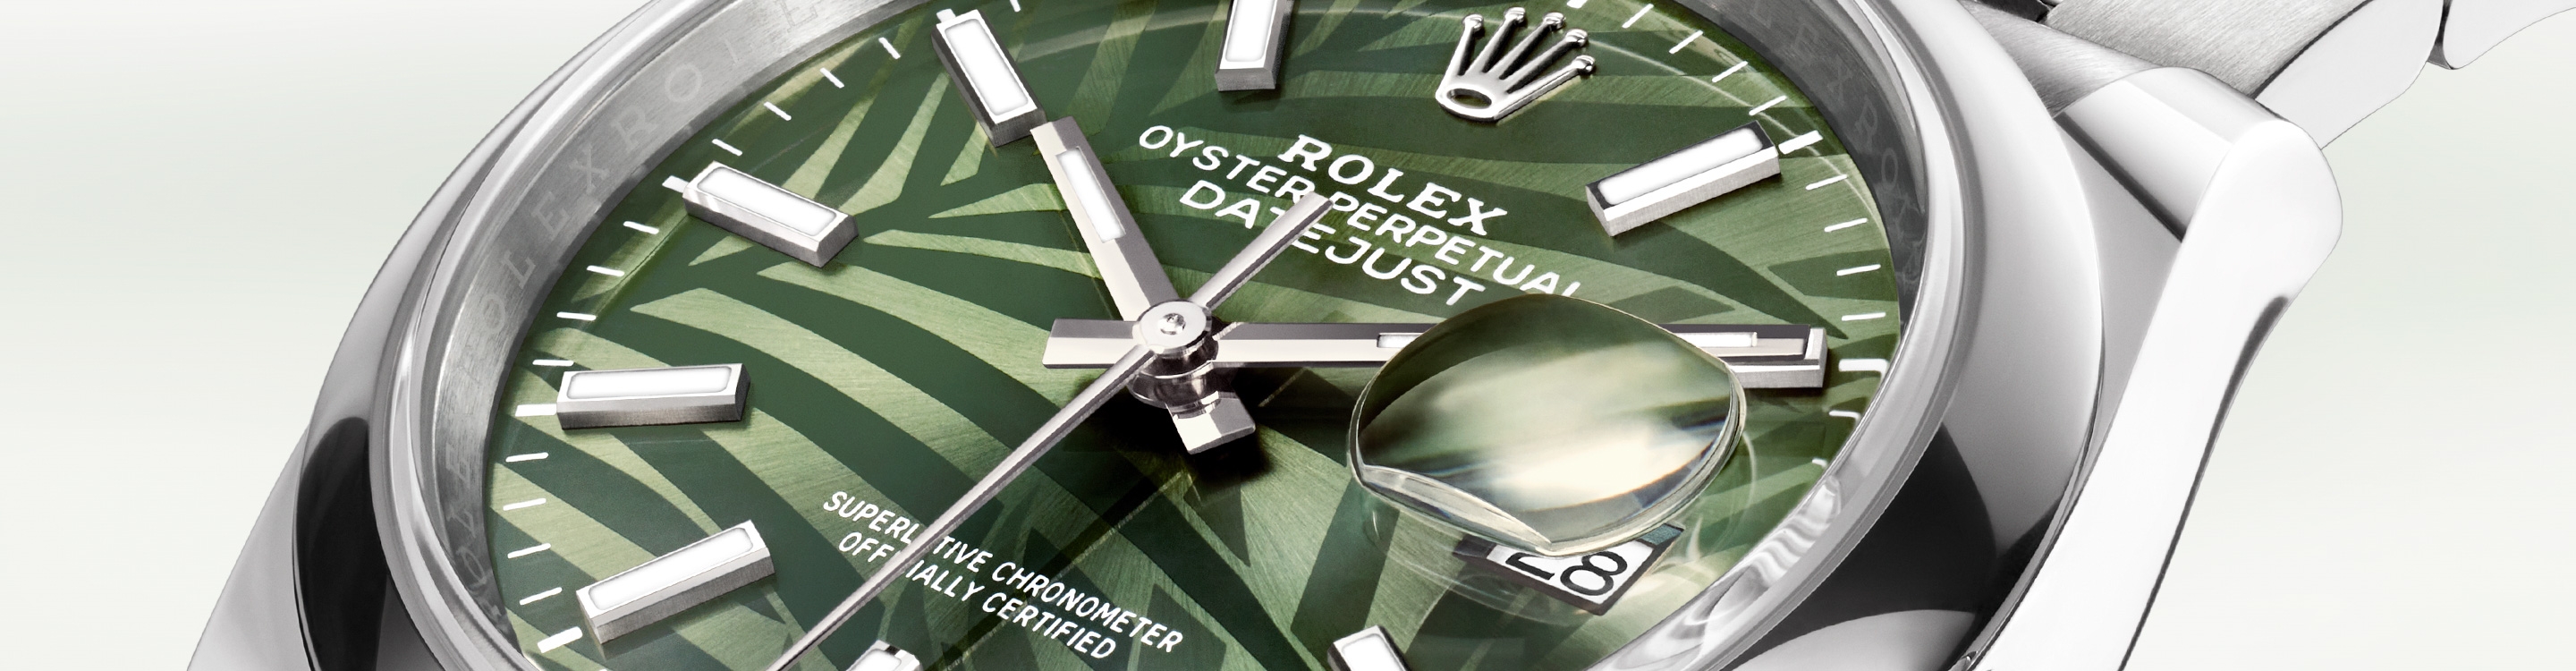 Rolex Datejust腕錶金及蠔式鋼款，M278383RBR-0021 | 歐洲坊